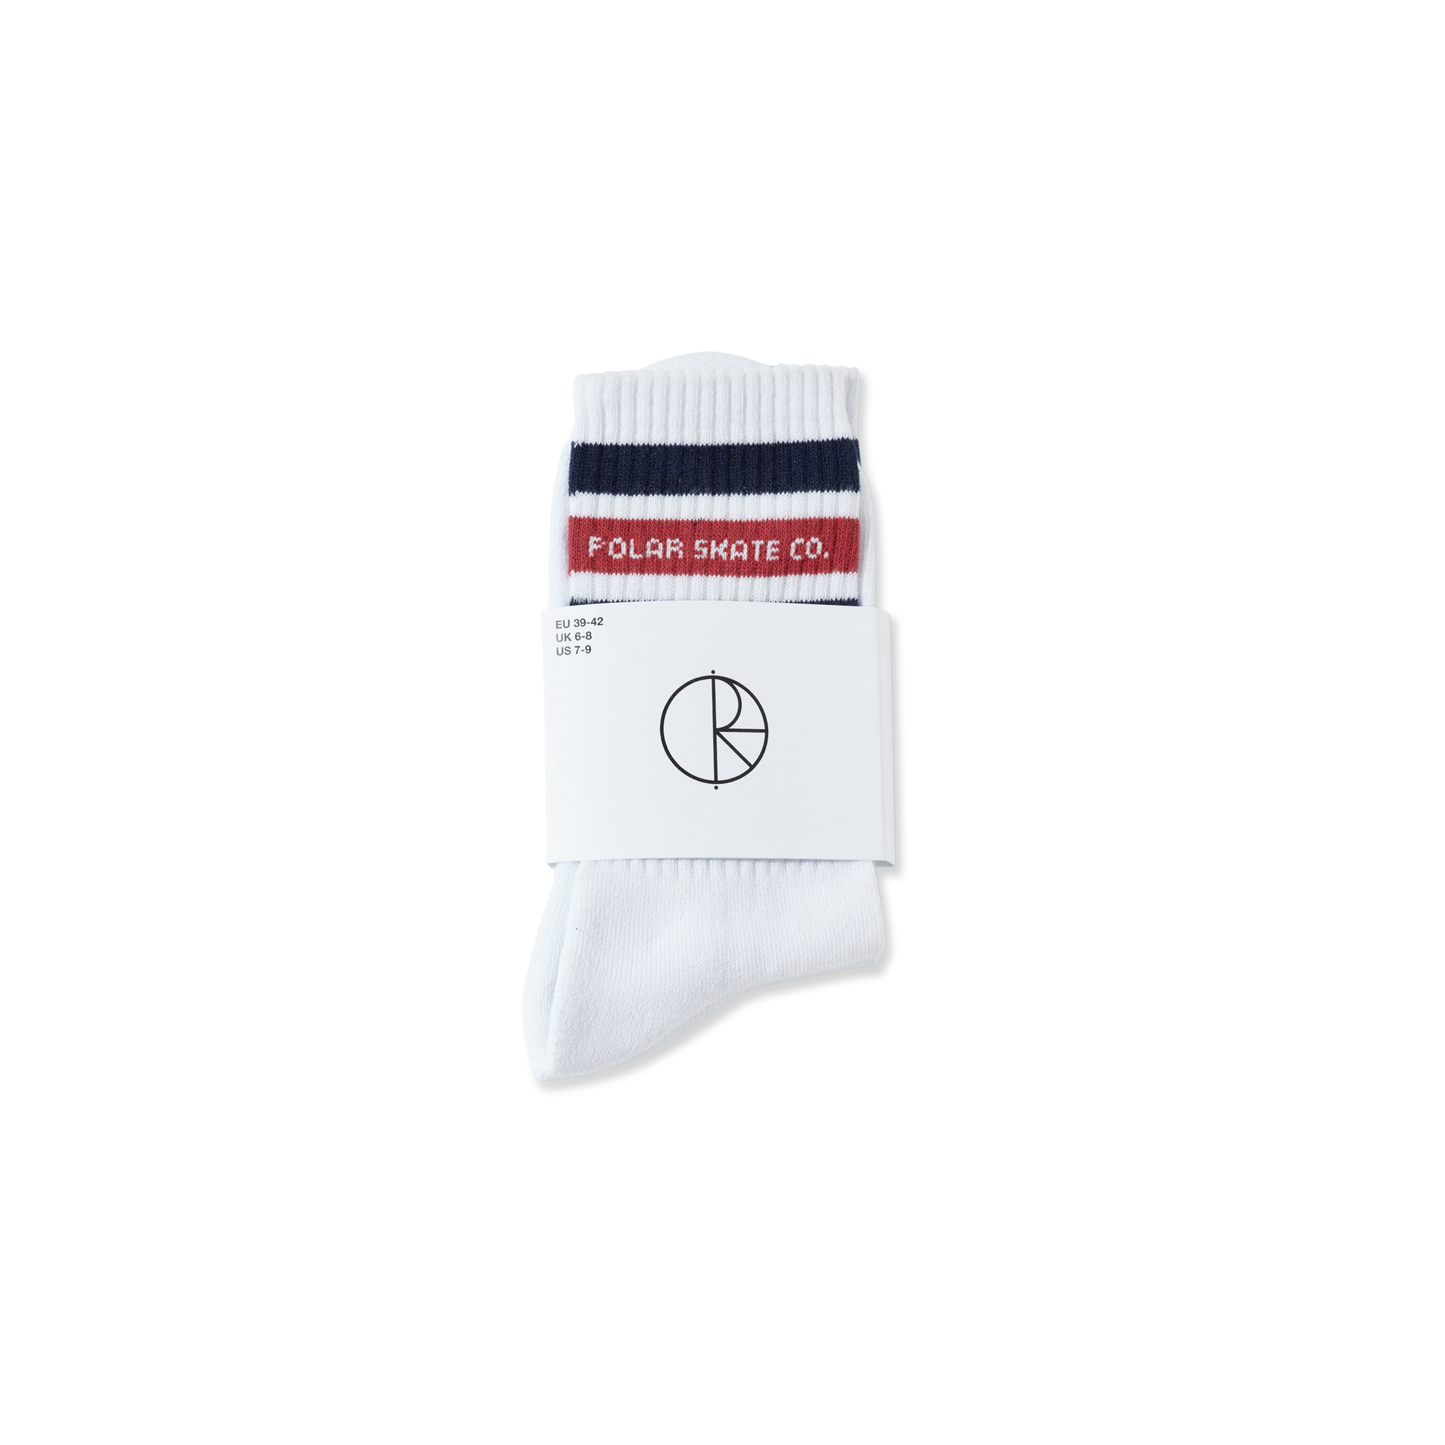 Fat Stripe Socks, White/Navy/Red